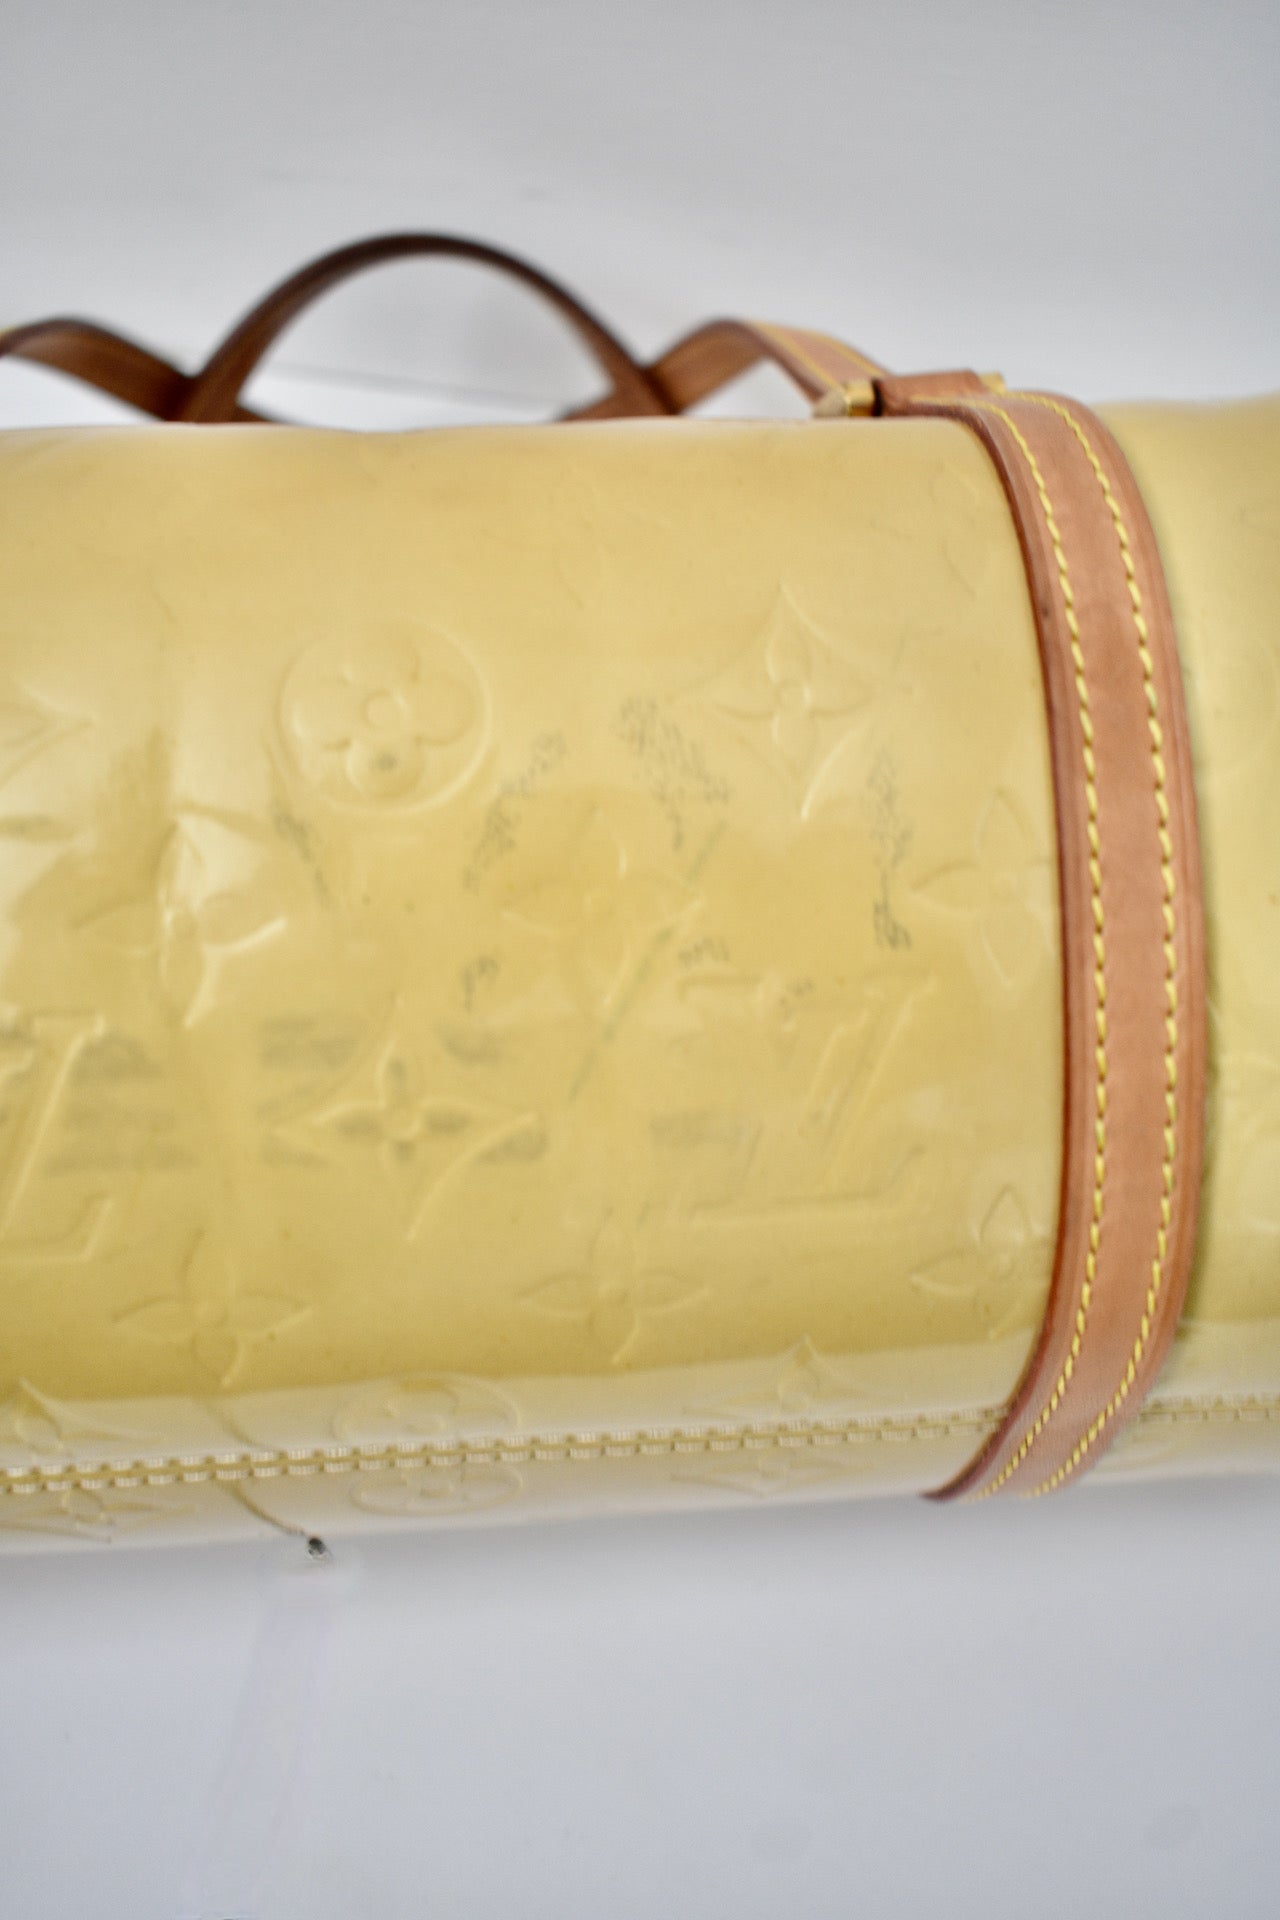 Louis Vuitton Bedford Handbag 280227